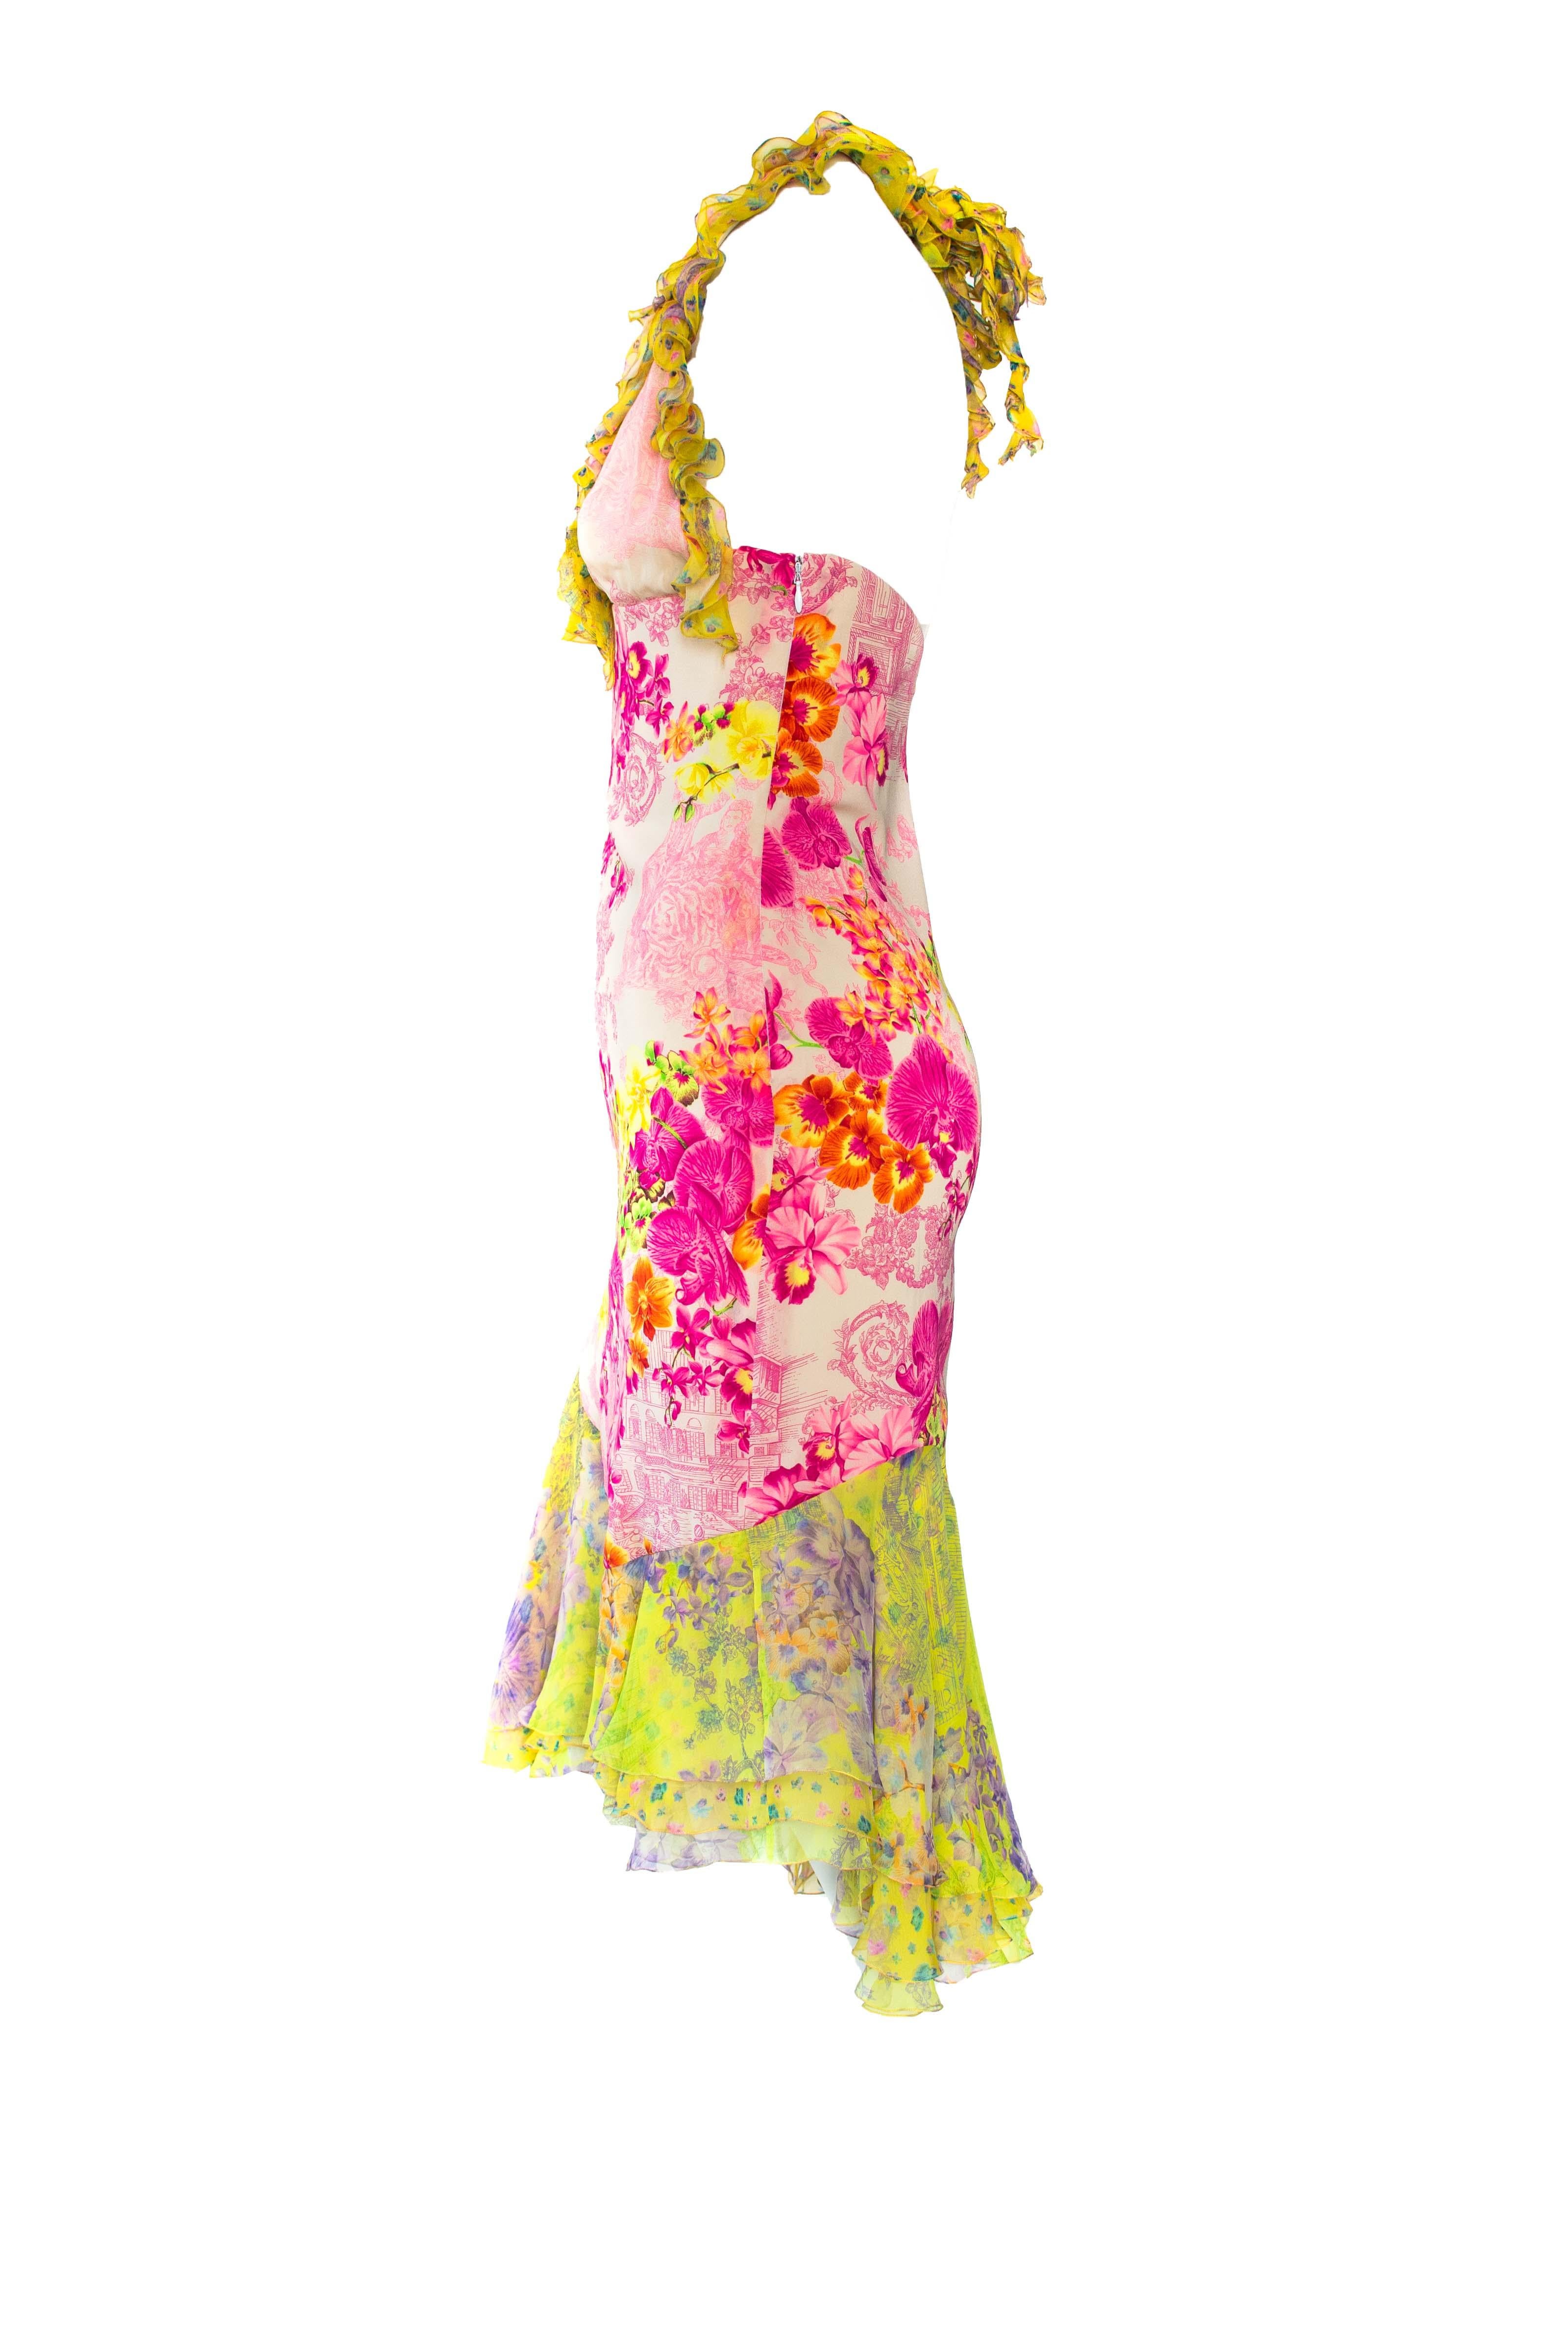 Beige S/S 2004 Versace Neon Floral Chiffon Dress Vintage Runway